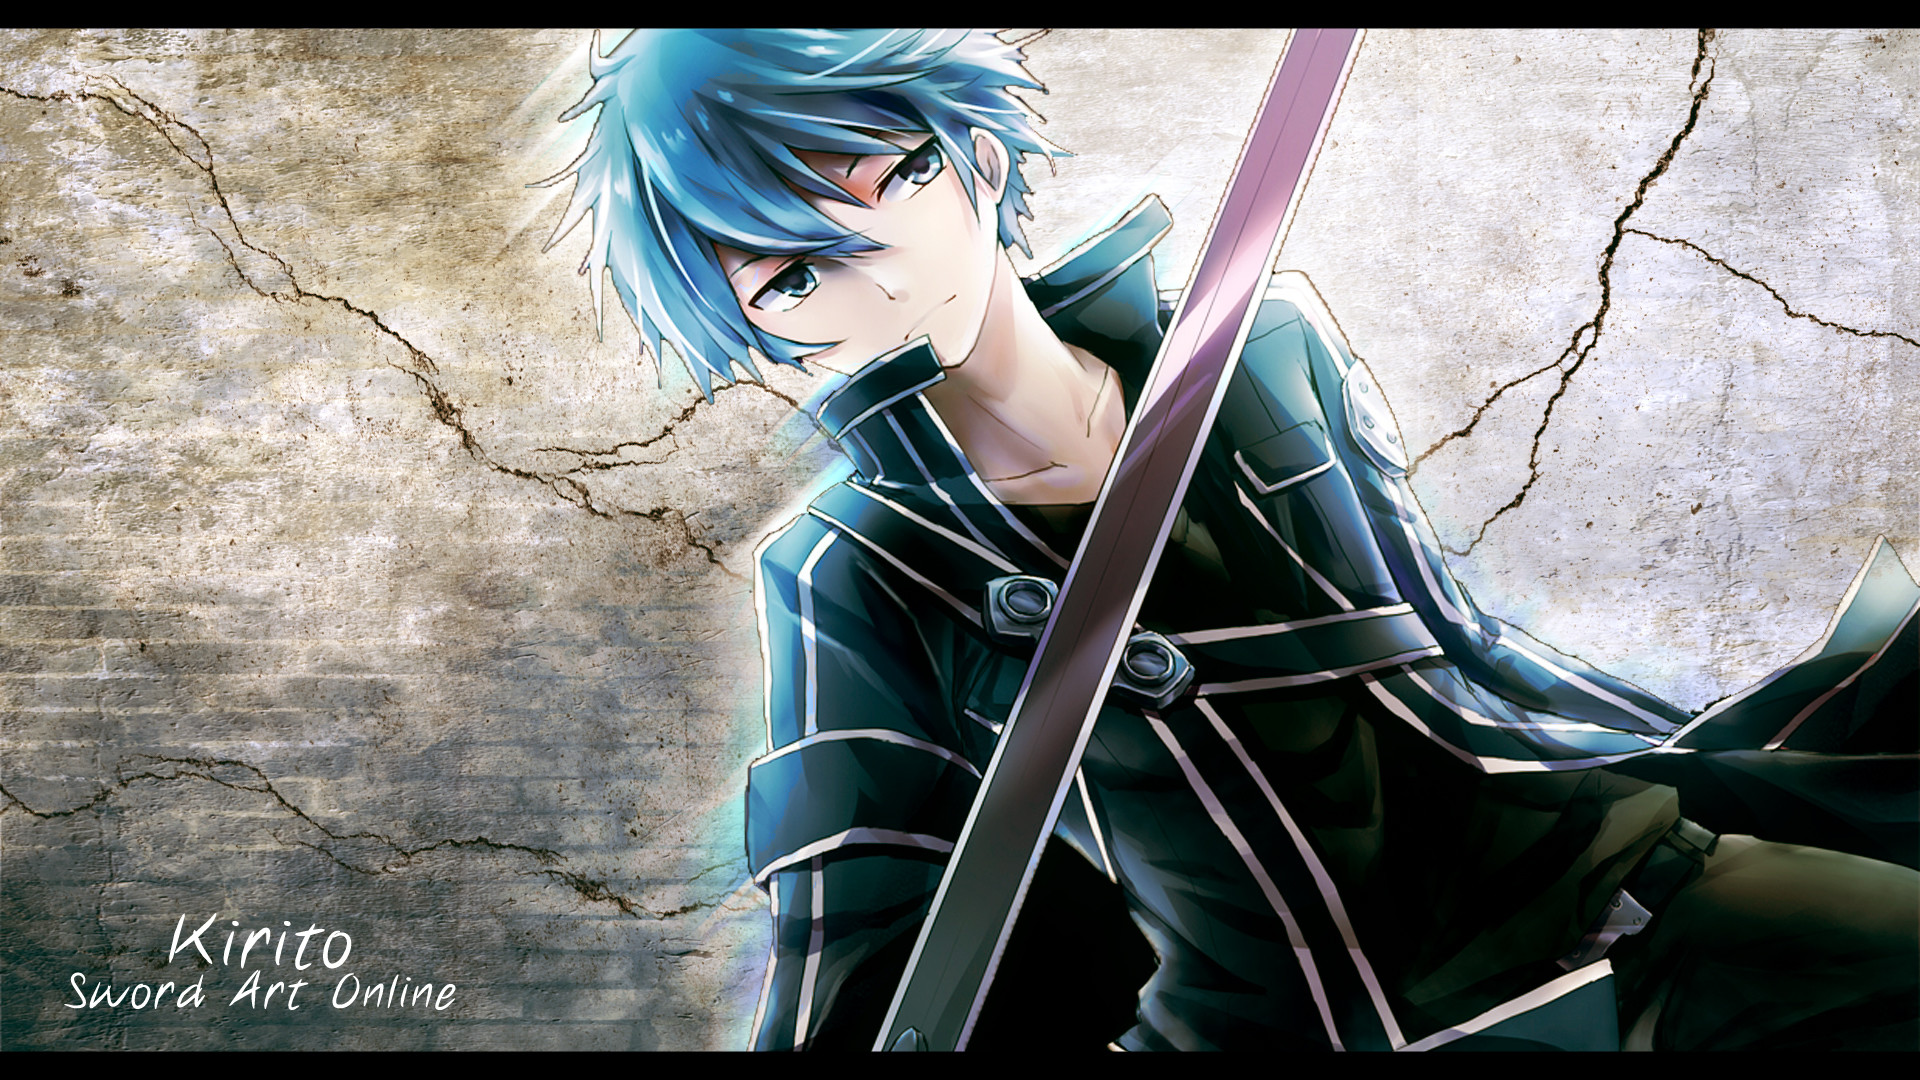 Sword Art Online – Kirito Wallpaper by eaZyHD